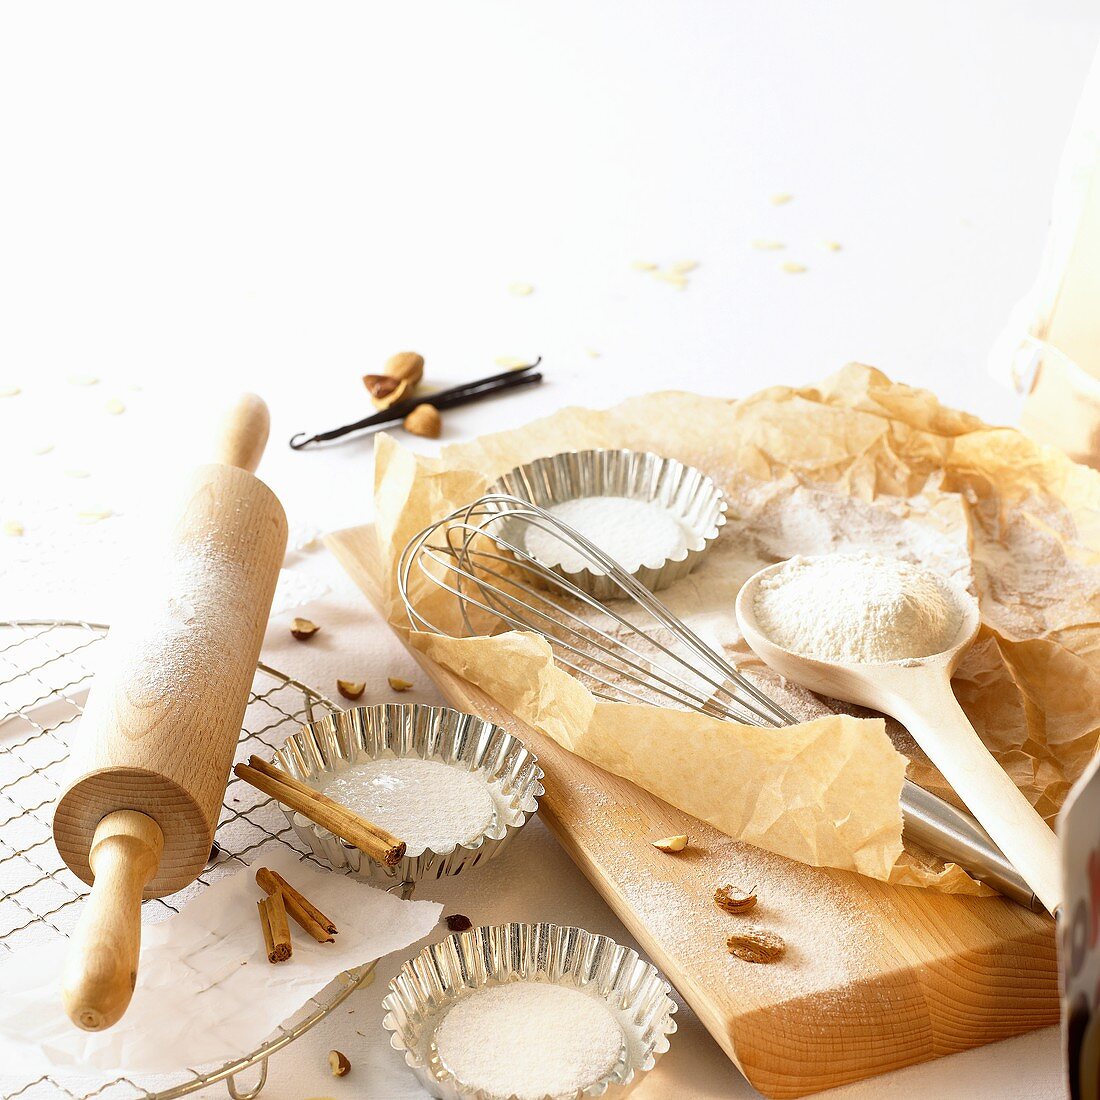 Various baking ingredients and utensils